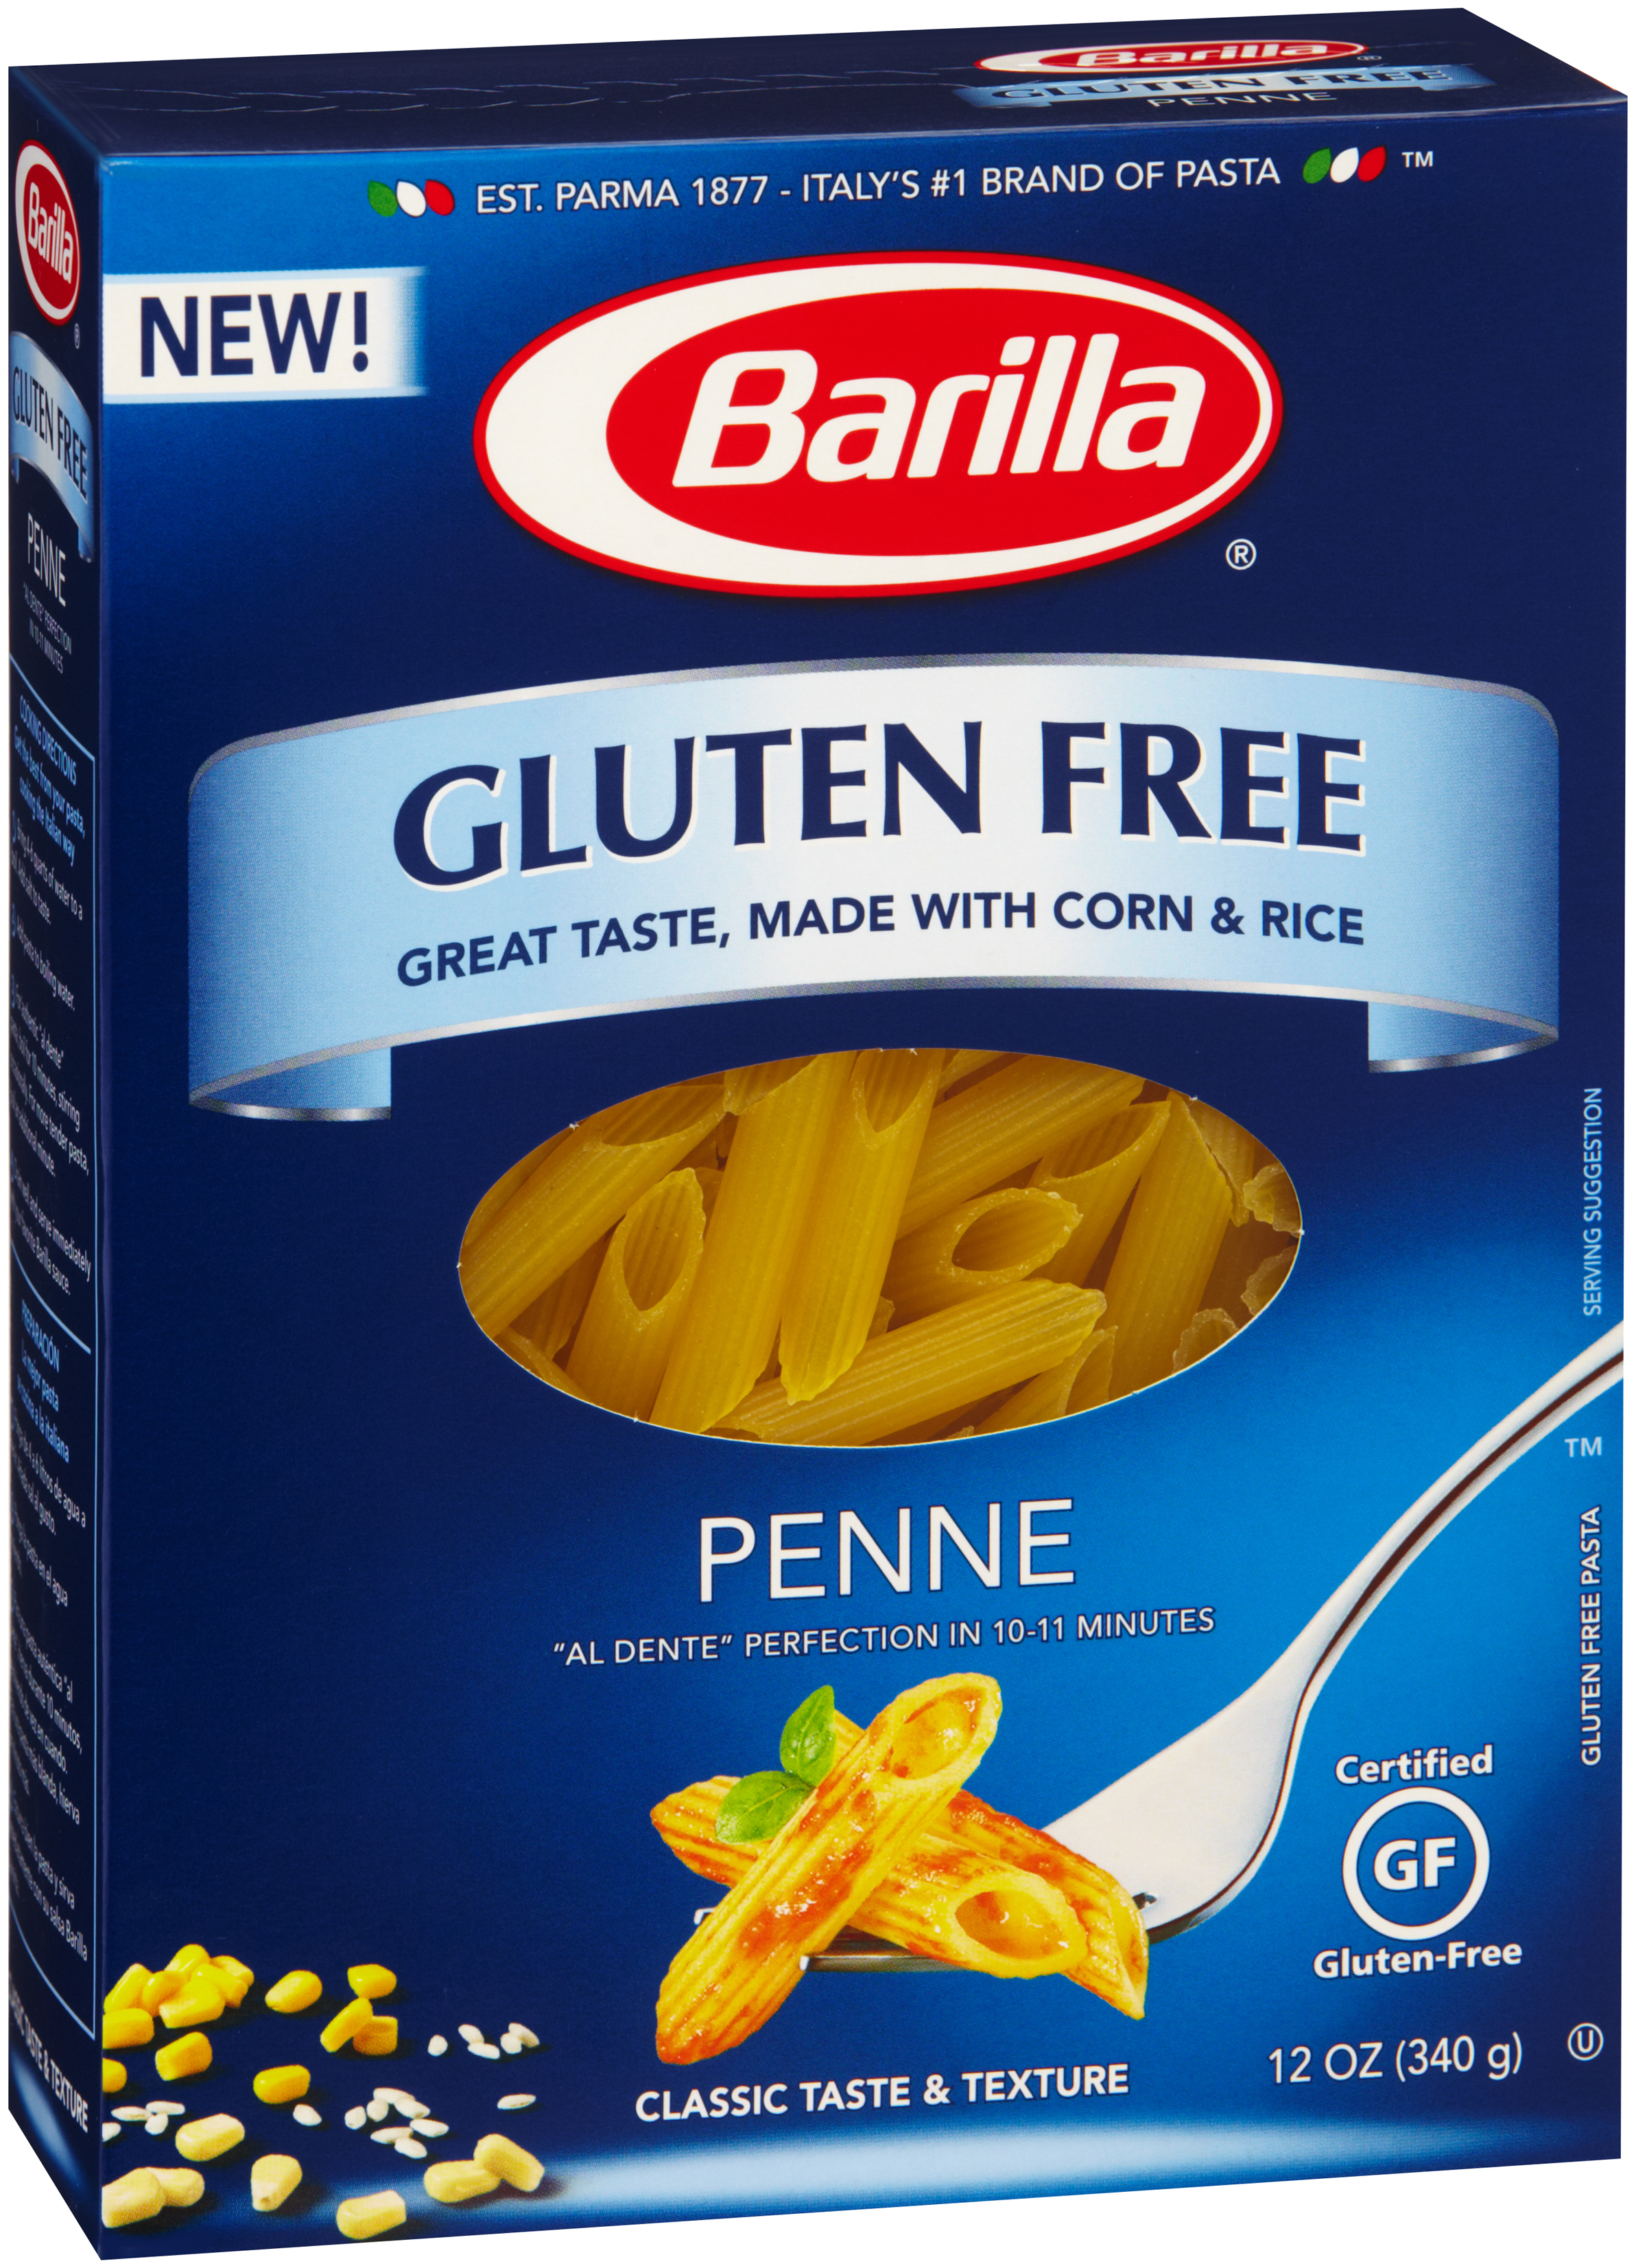 Barilla Gluten-Free Pasta Only $0.64 at Target! - AddictedToSaving.com